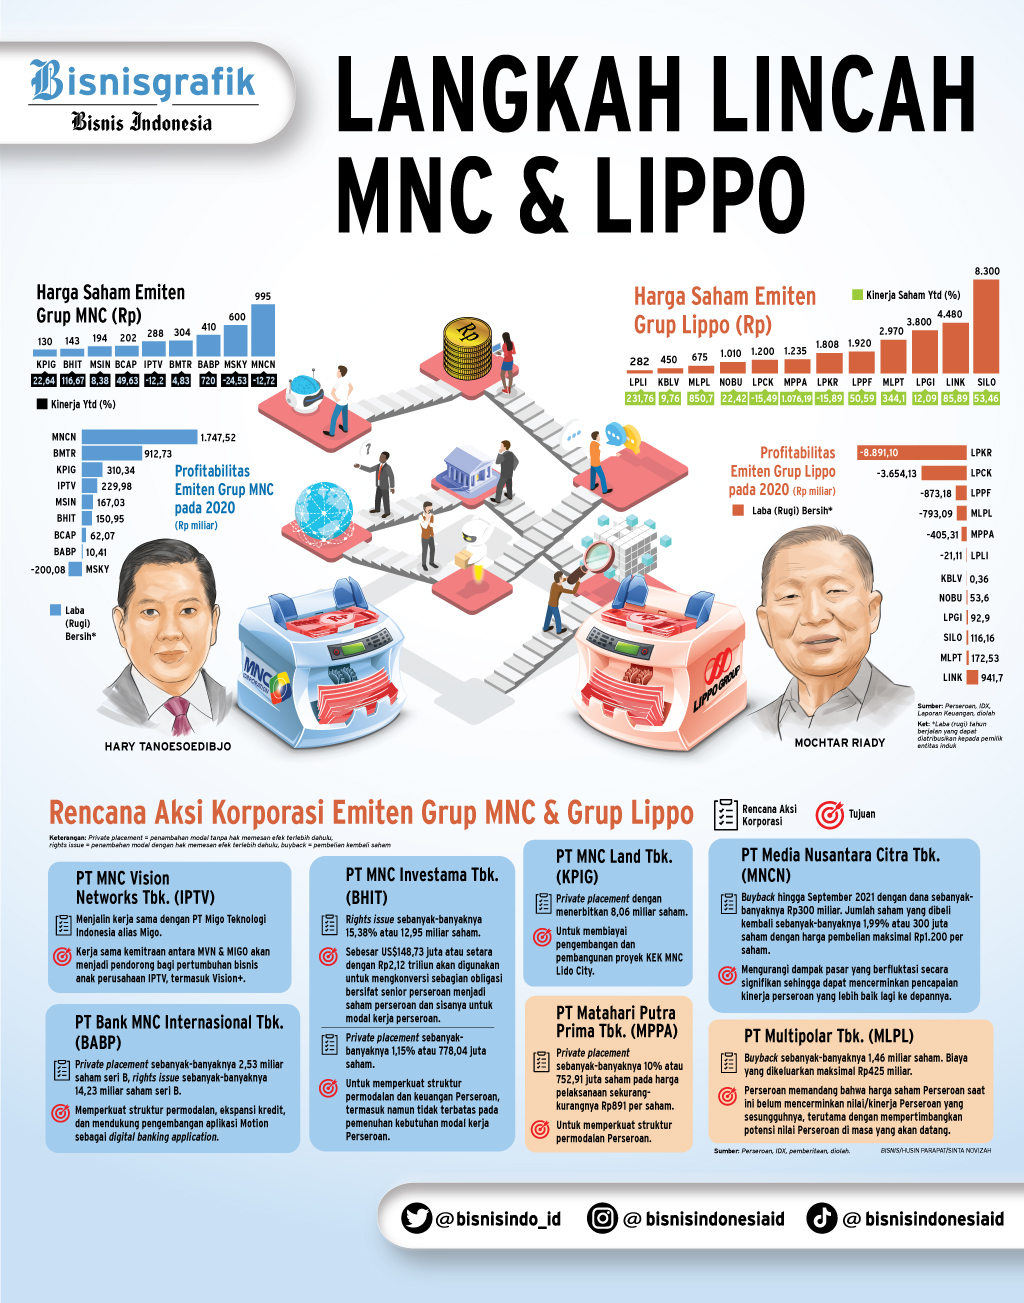  AKSI KORPORASI : Langkah Lincah MNC & Lippo